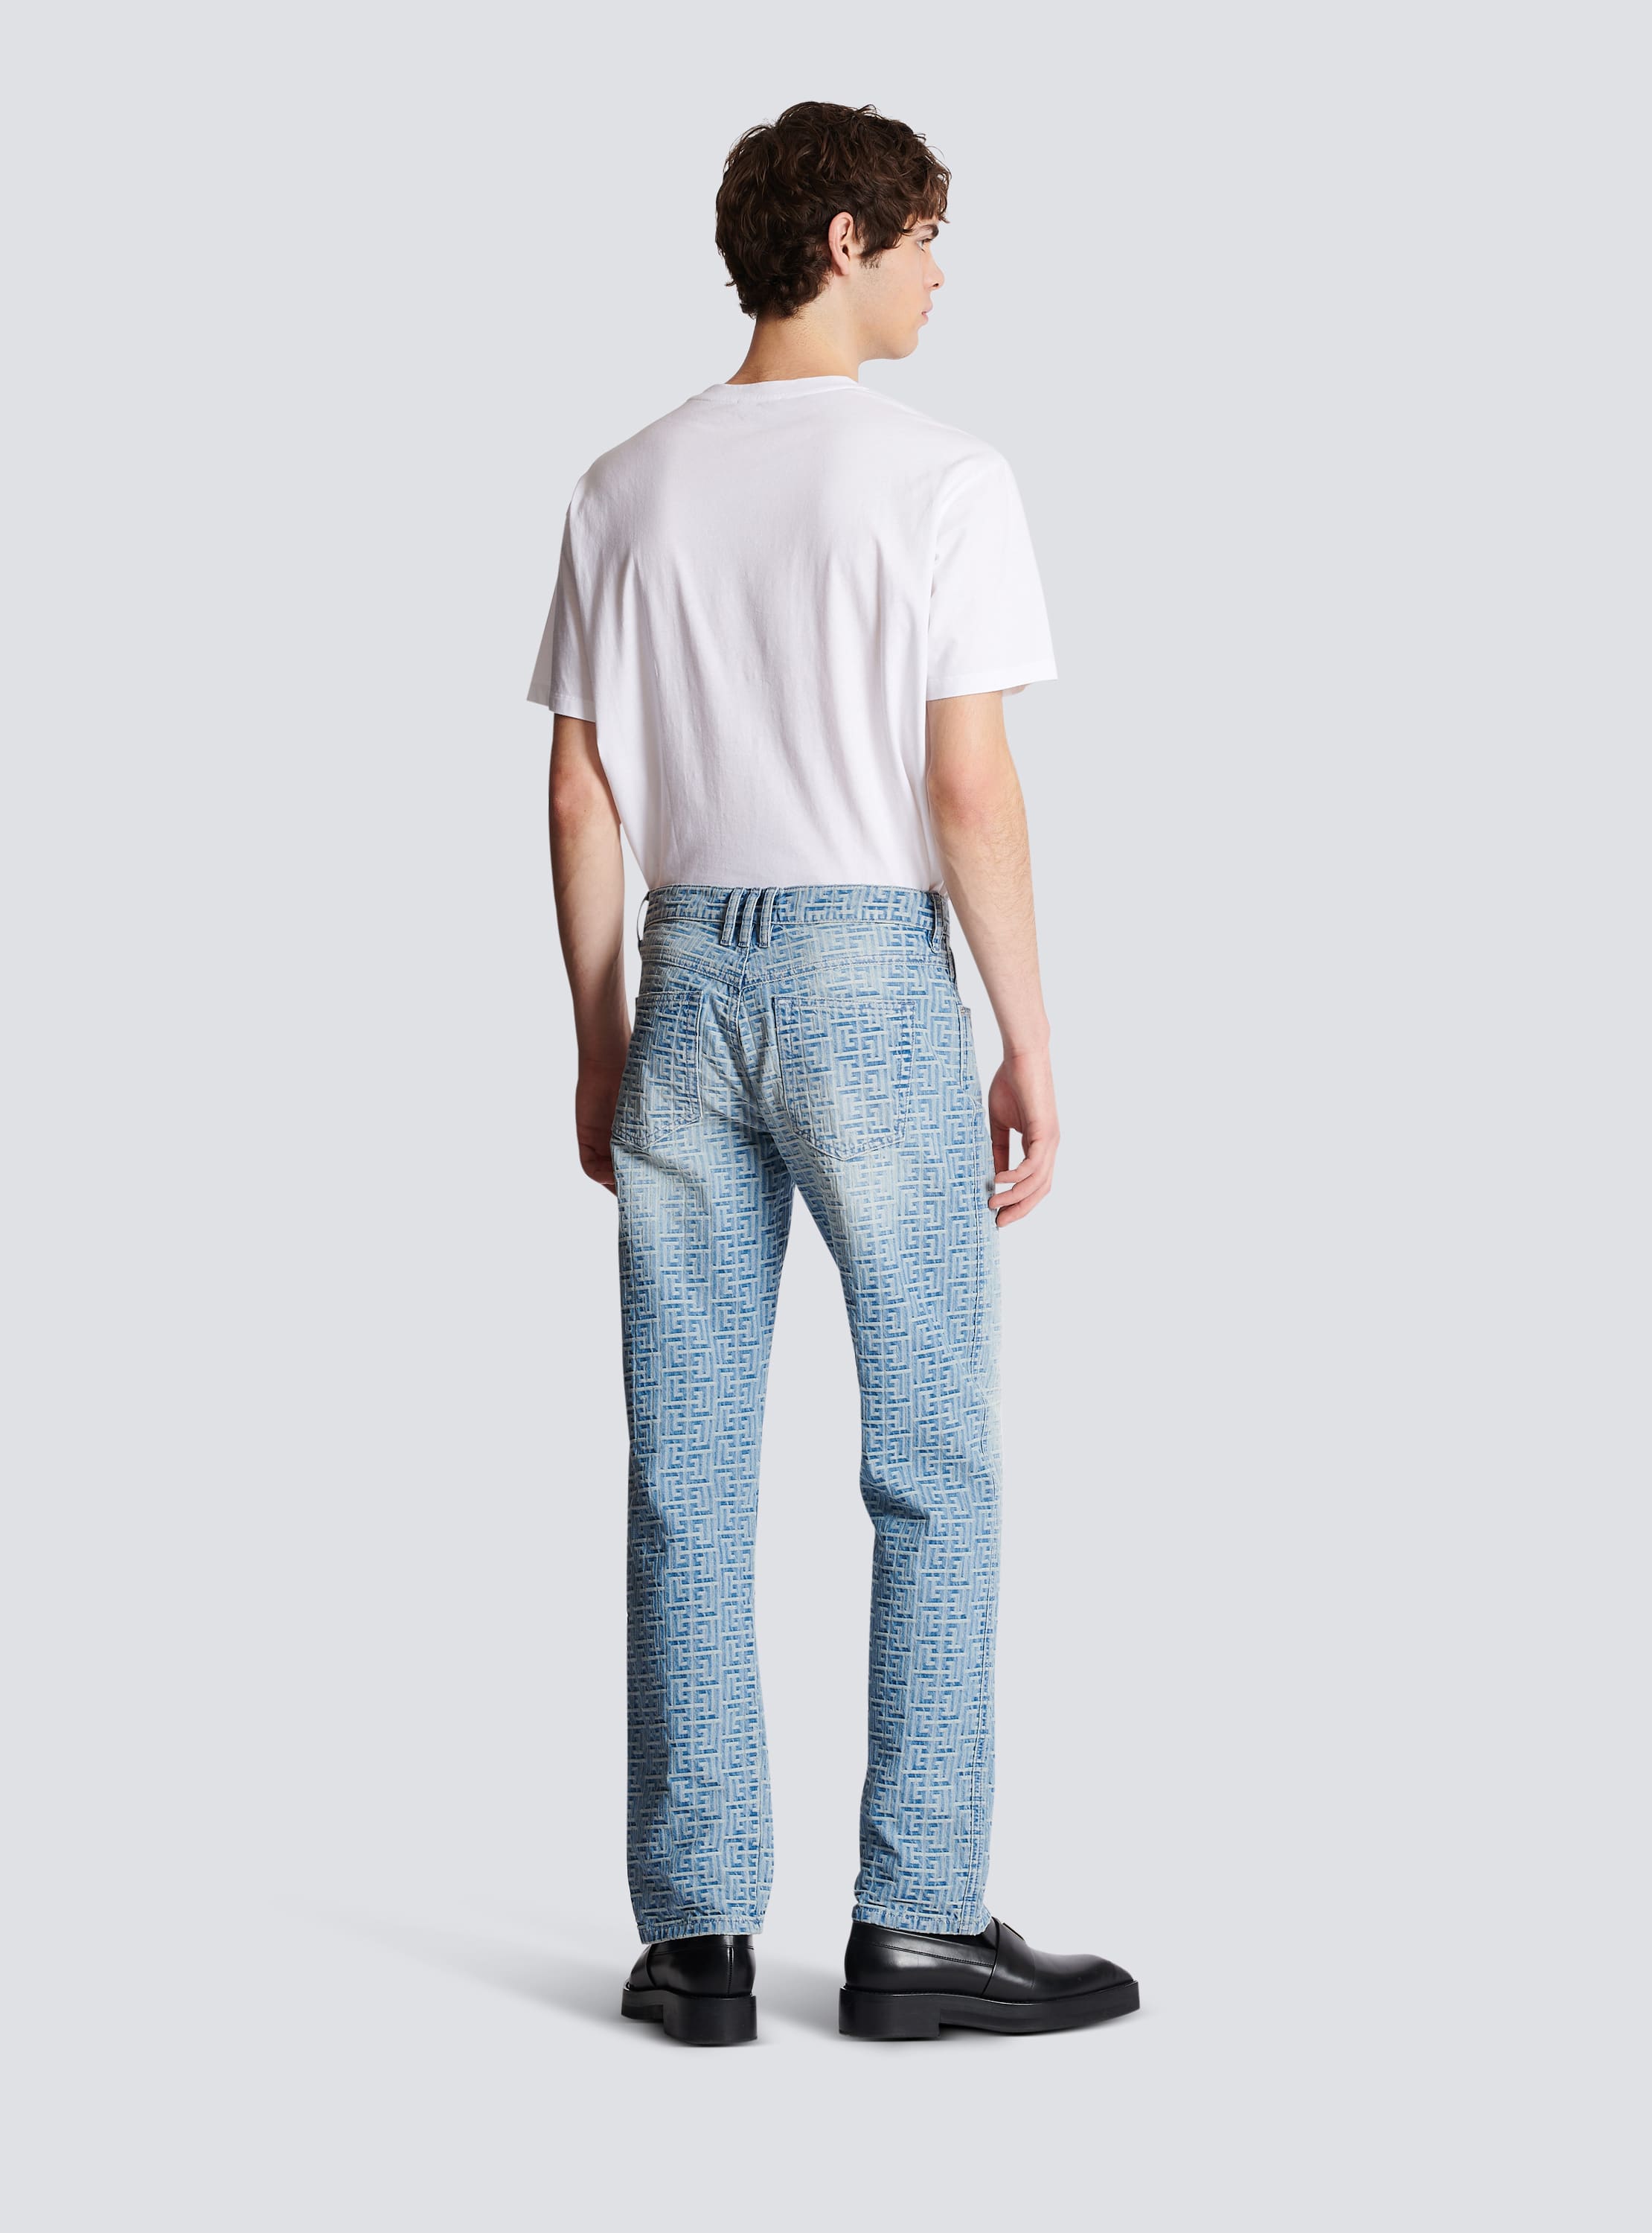 Monogrammed jacquard denim jeans